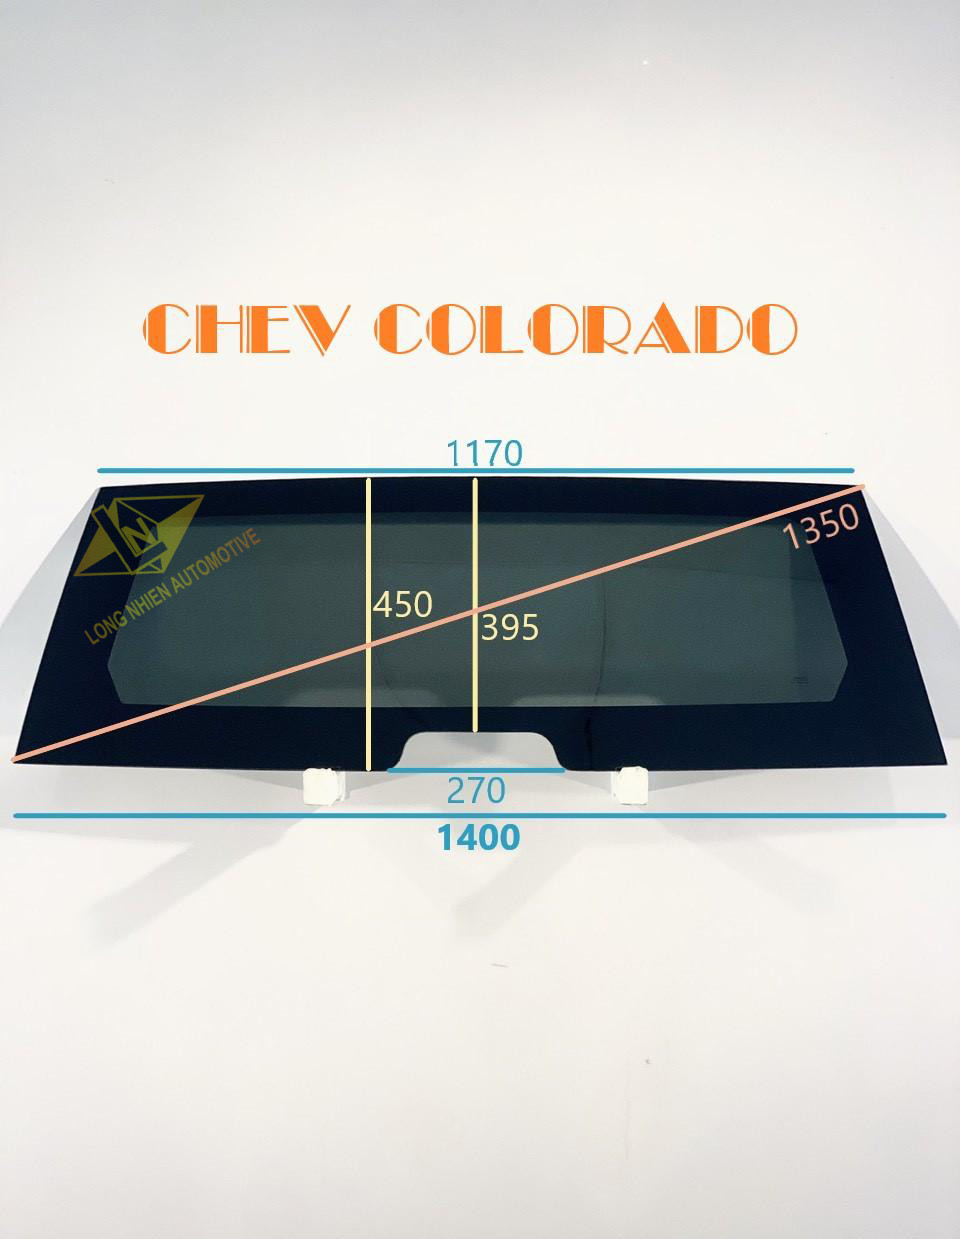 CỐP CHEVROLET COLORADO (450x1400)